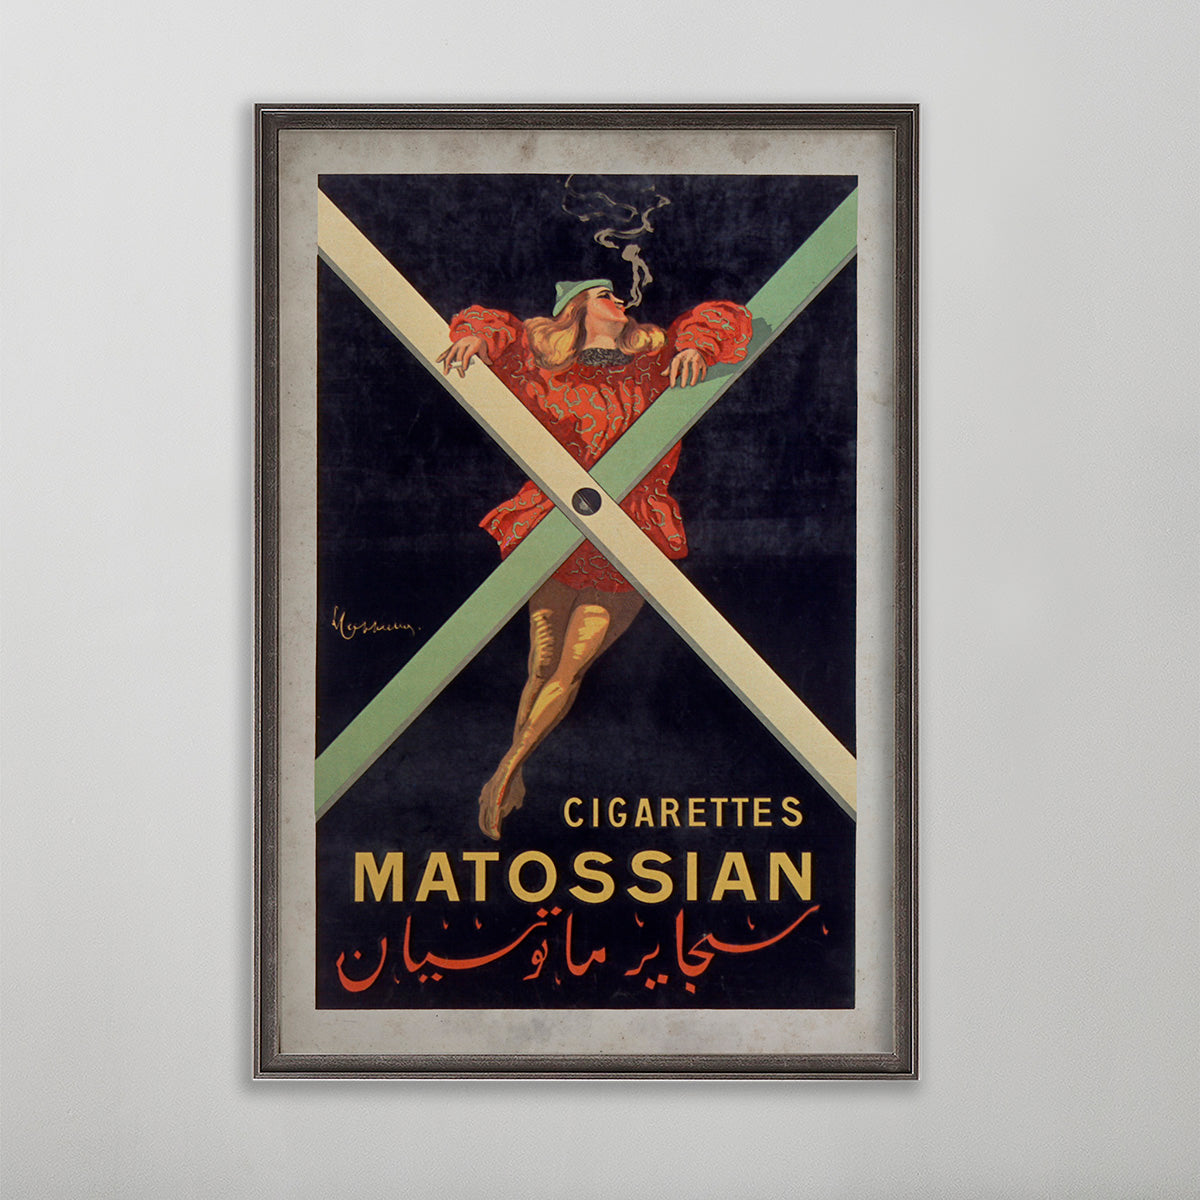 Cigarettes Matossian poster wall art by leonetto cappiello. Man smoking cigarette on vintage poster.